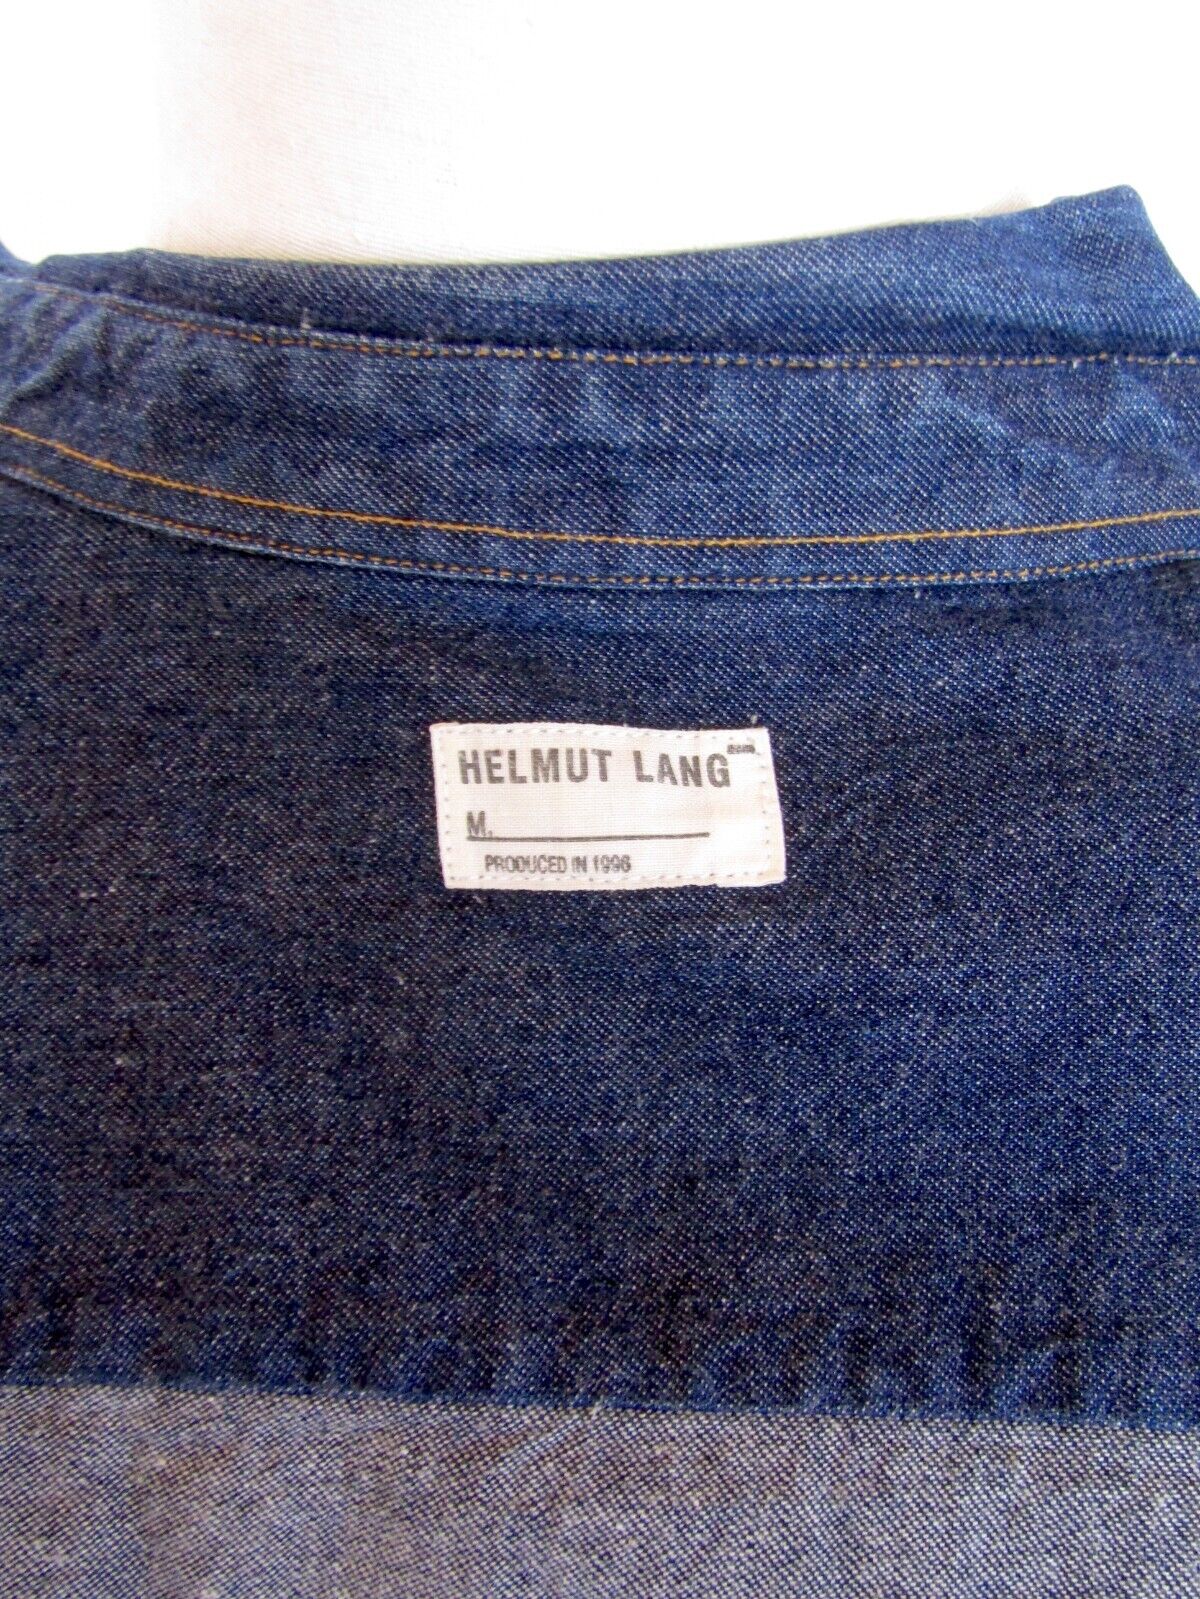 96 HELMUT LANG Archive Denim Shirt Very Rare - image 7